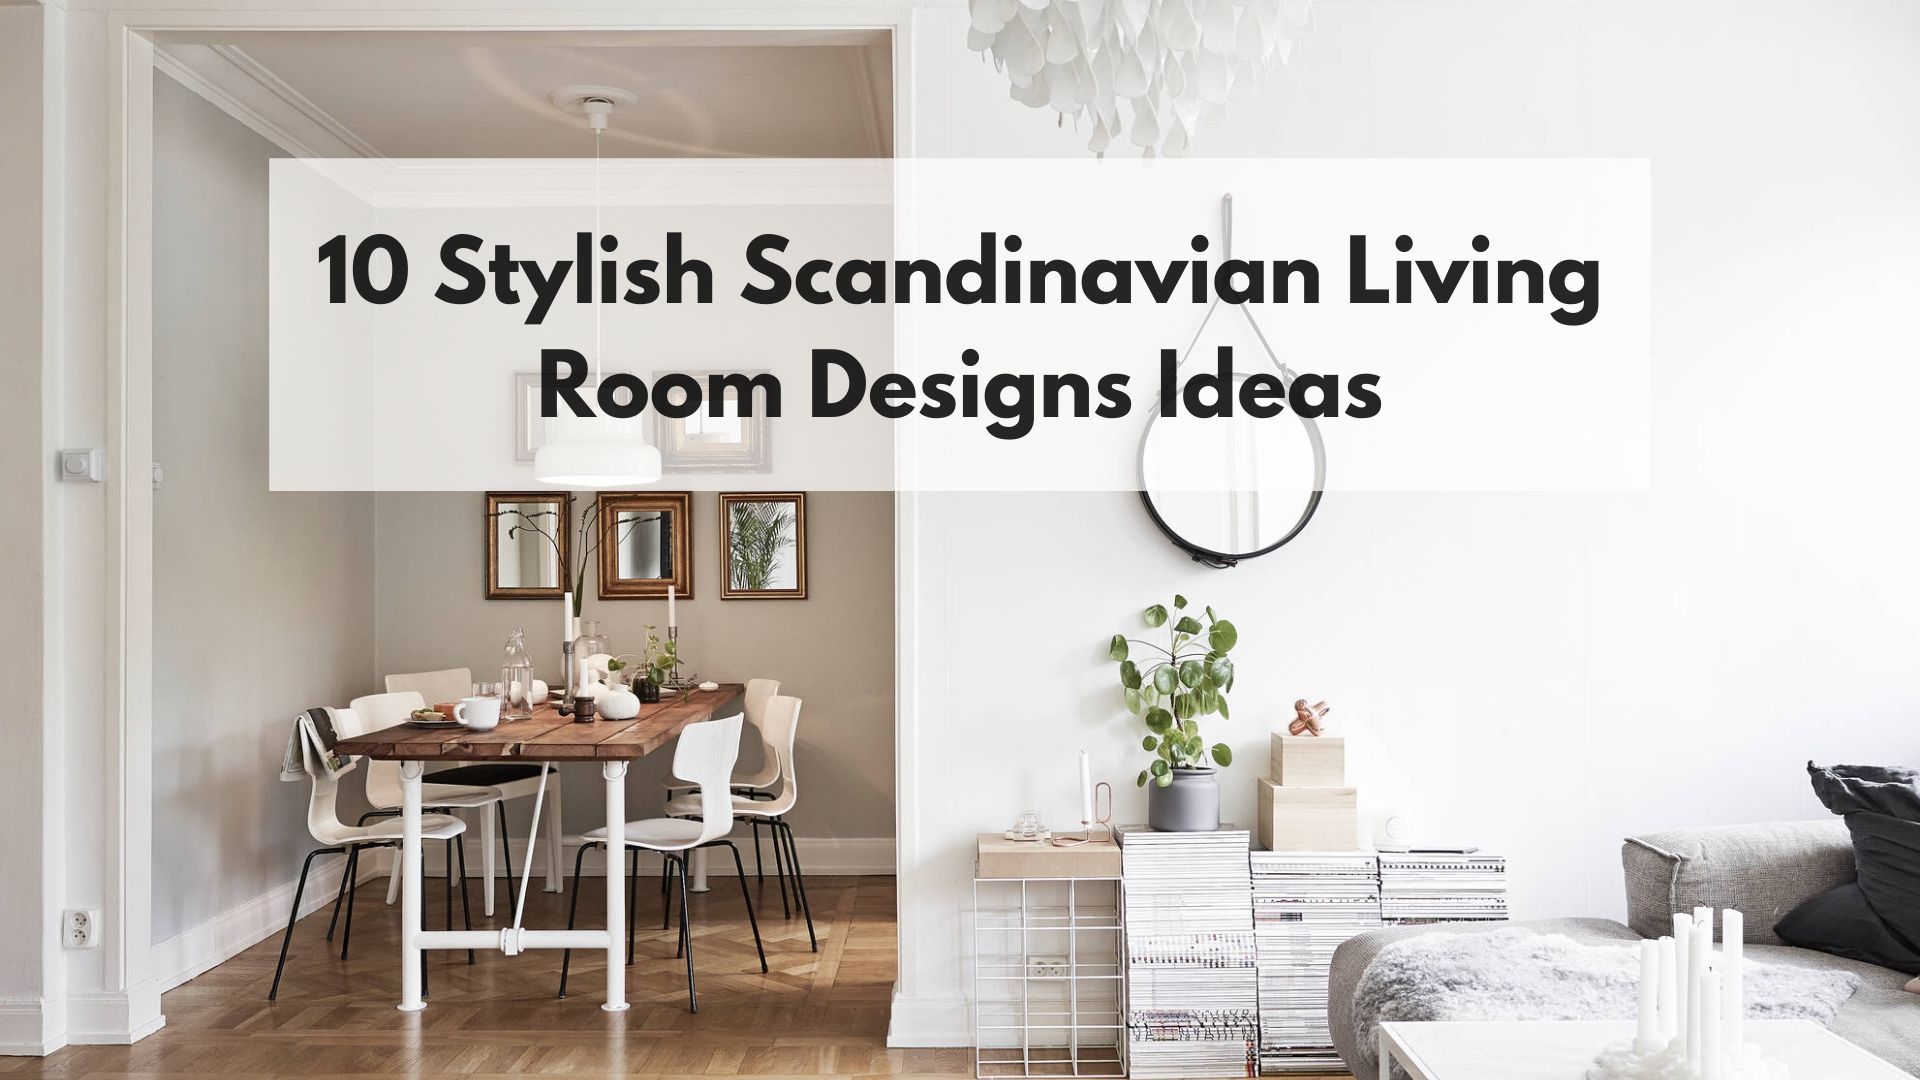 main_10 Stylish Scandinavian Living Room Designs Ideas